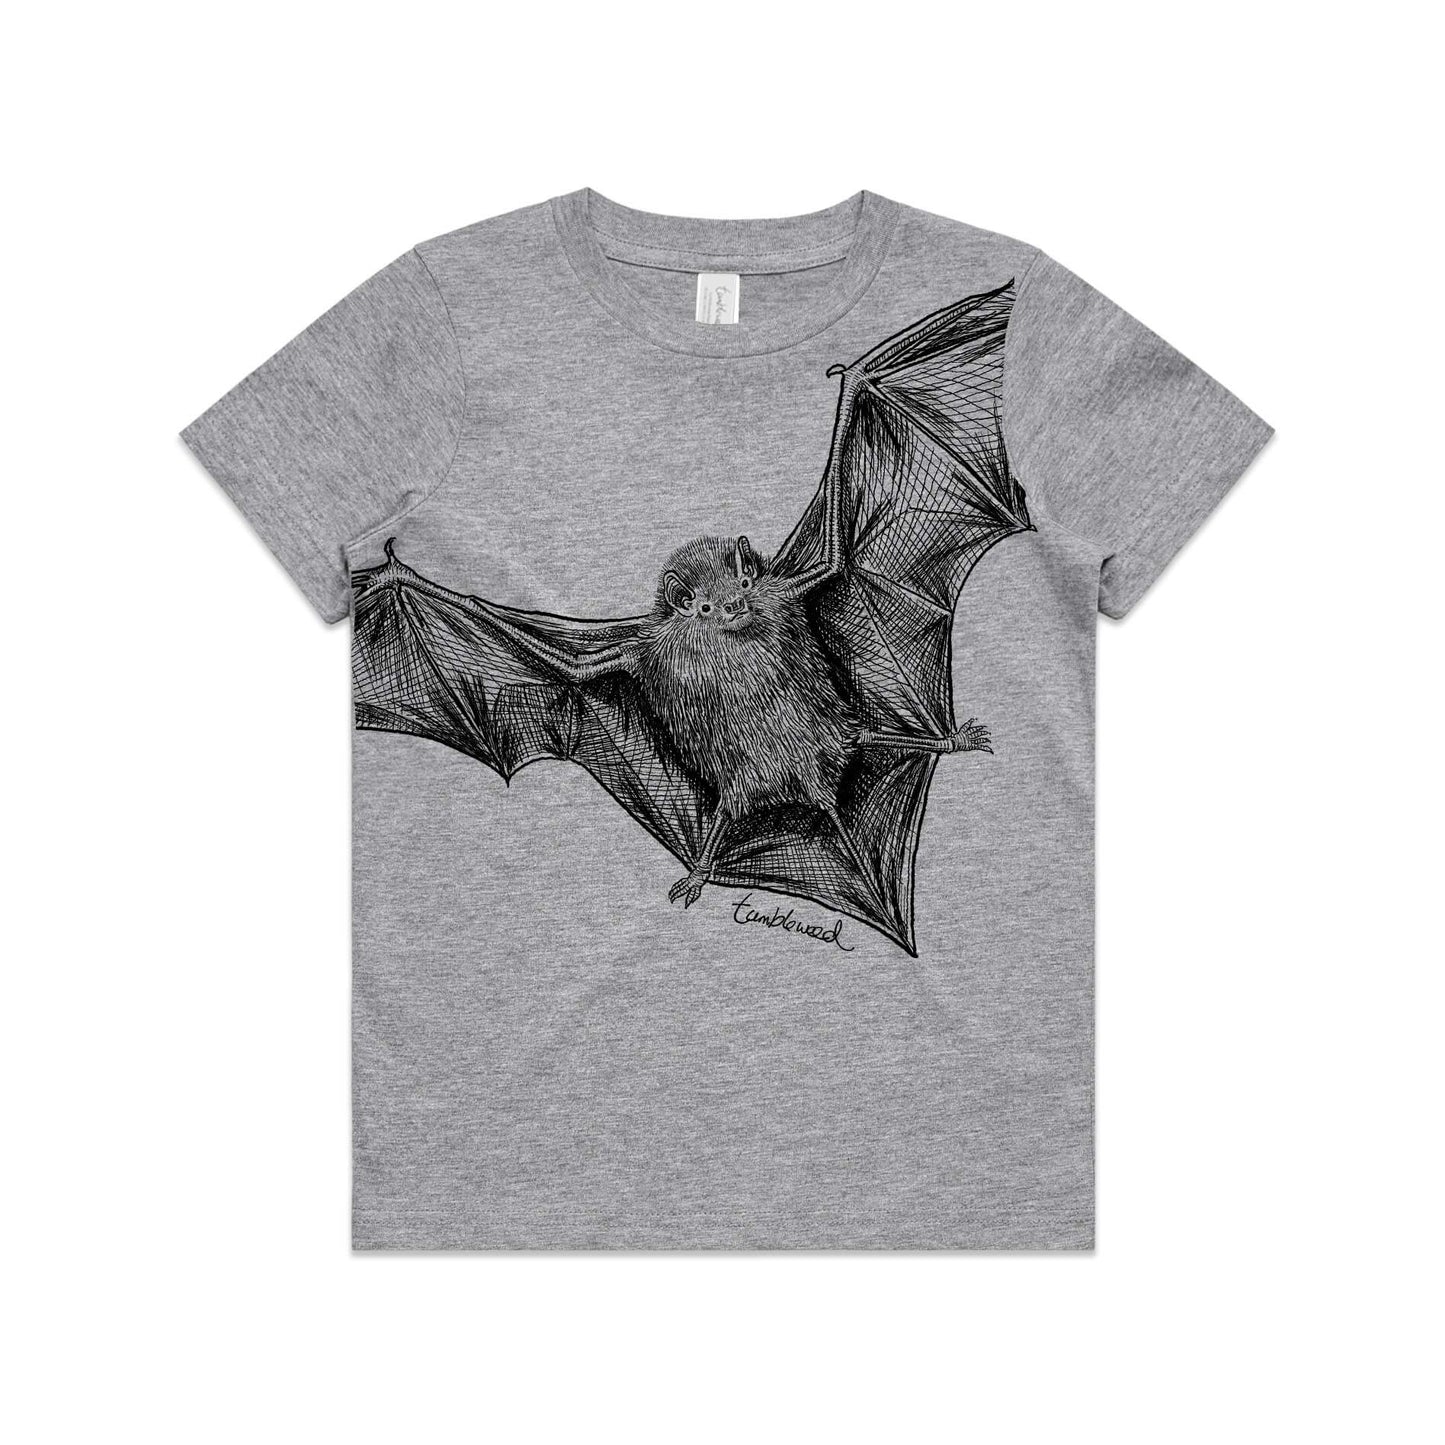 Grey marle, cotton kids' t-shirt with screen printed Kids bat design.